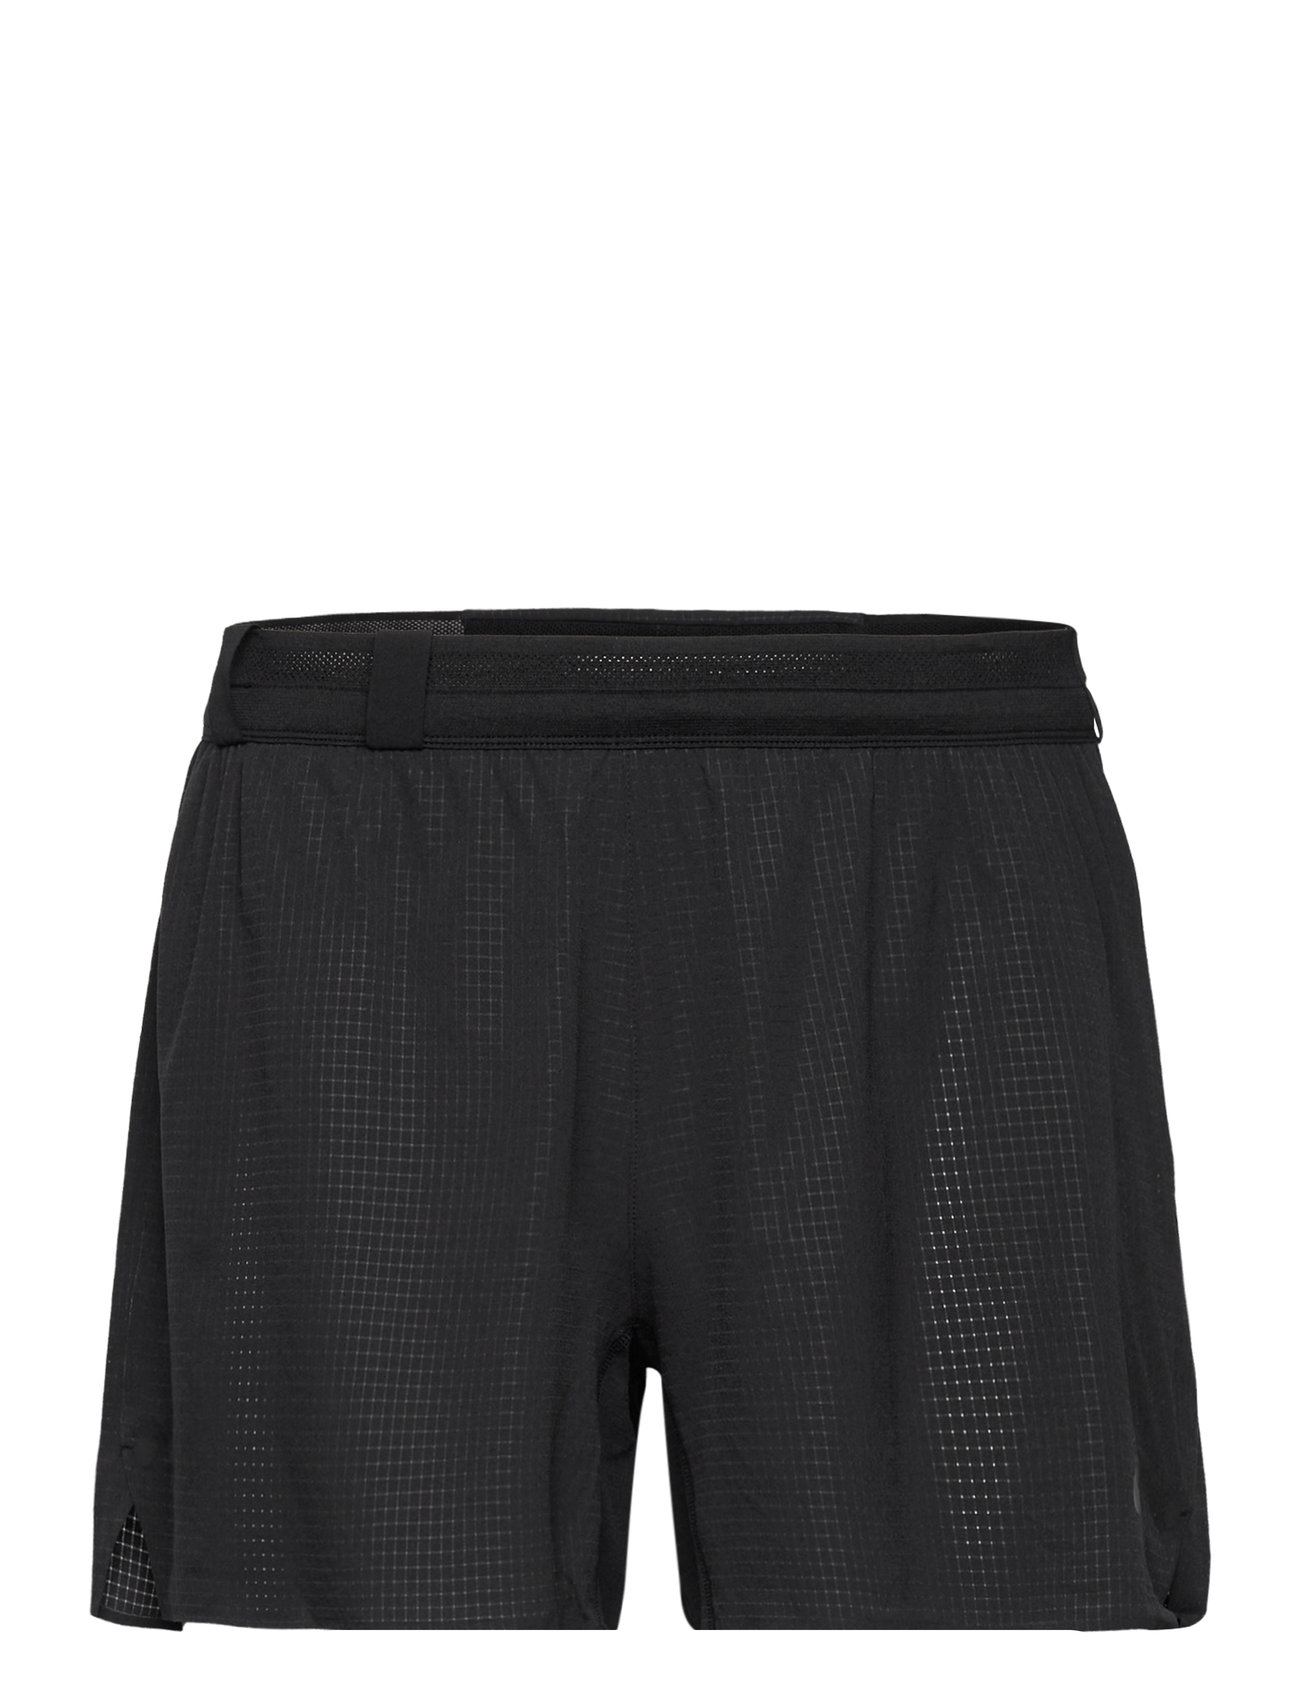 Metarun 5In Short Sport Shorts Sport Shorts Black Asics